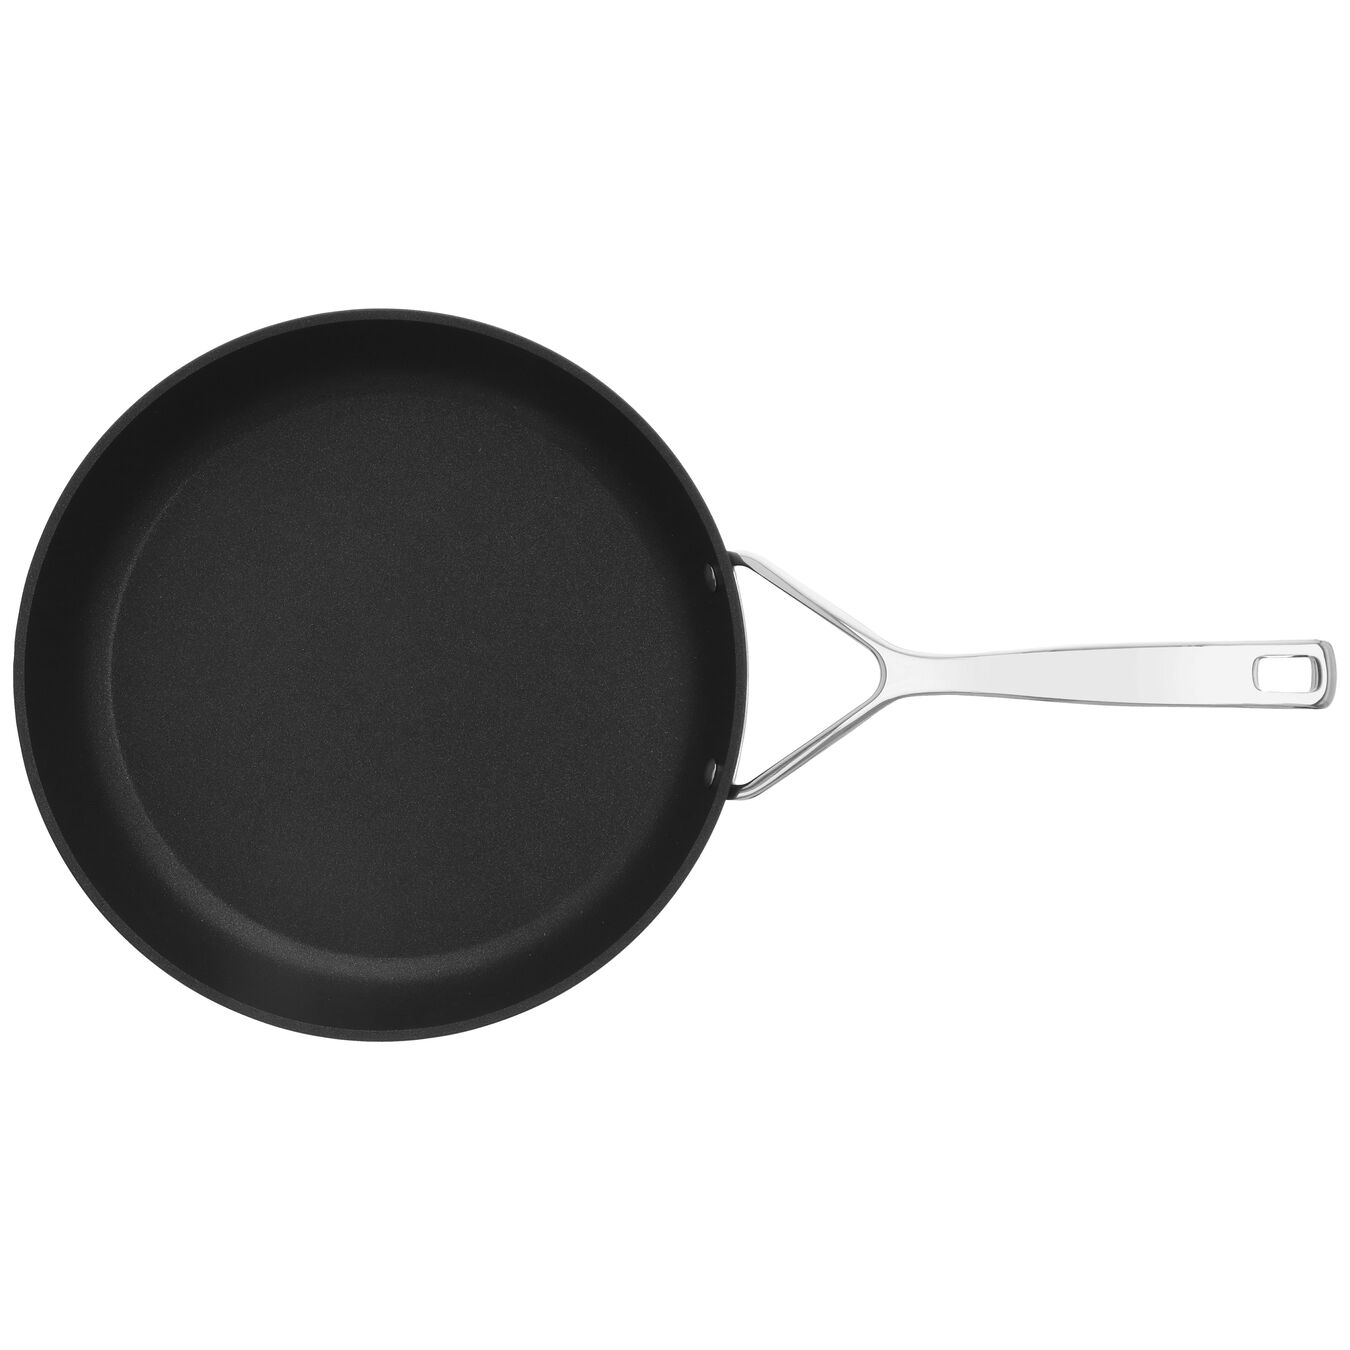 28 cm Aluminum Frying pan silver-black,,large 4